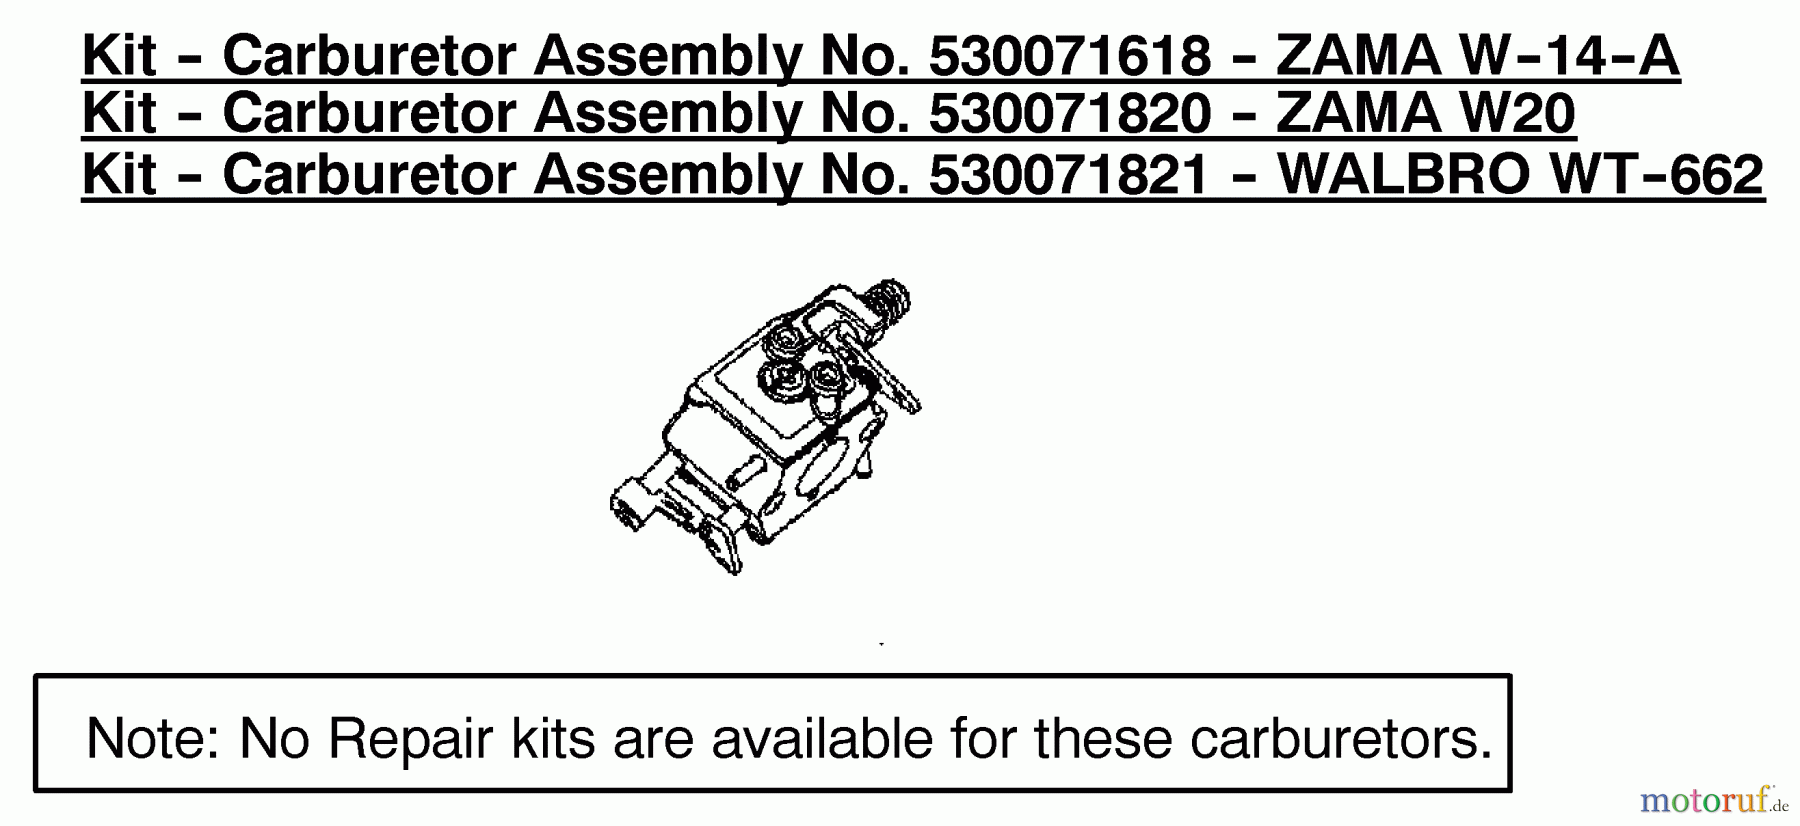  Poulan / Weed Eater Motorsägen 1975 (Type 4) - Poulan Woodshark Chainsaw Carburetor Assembly (Walbro WT-662) P/N 530071821